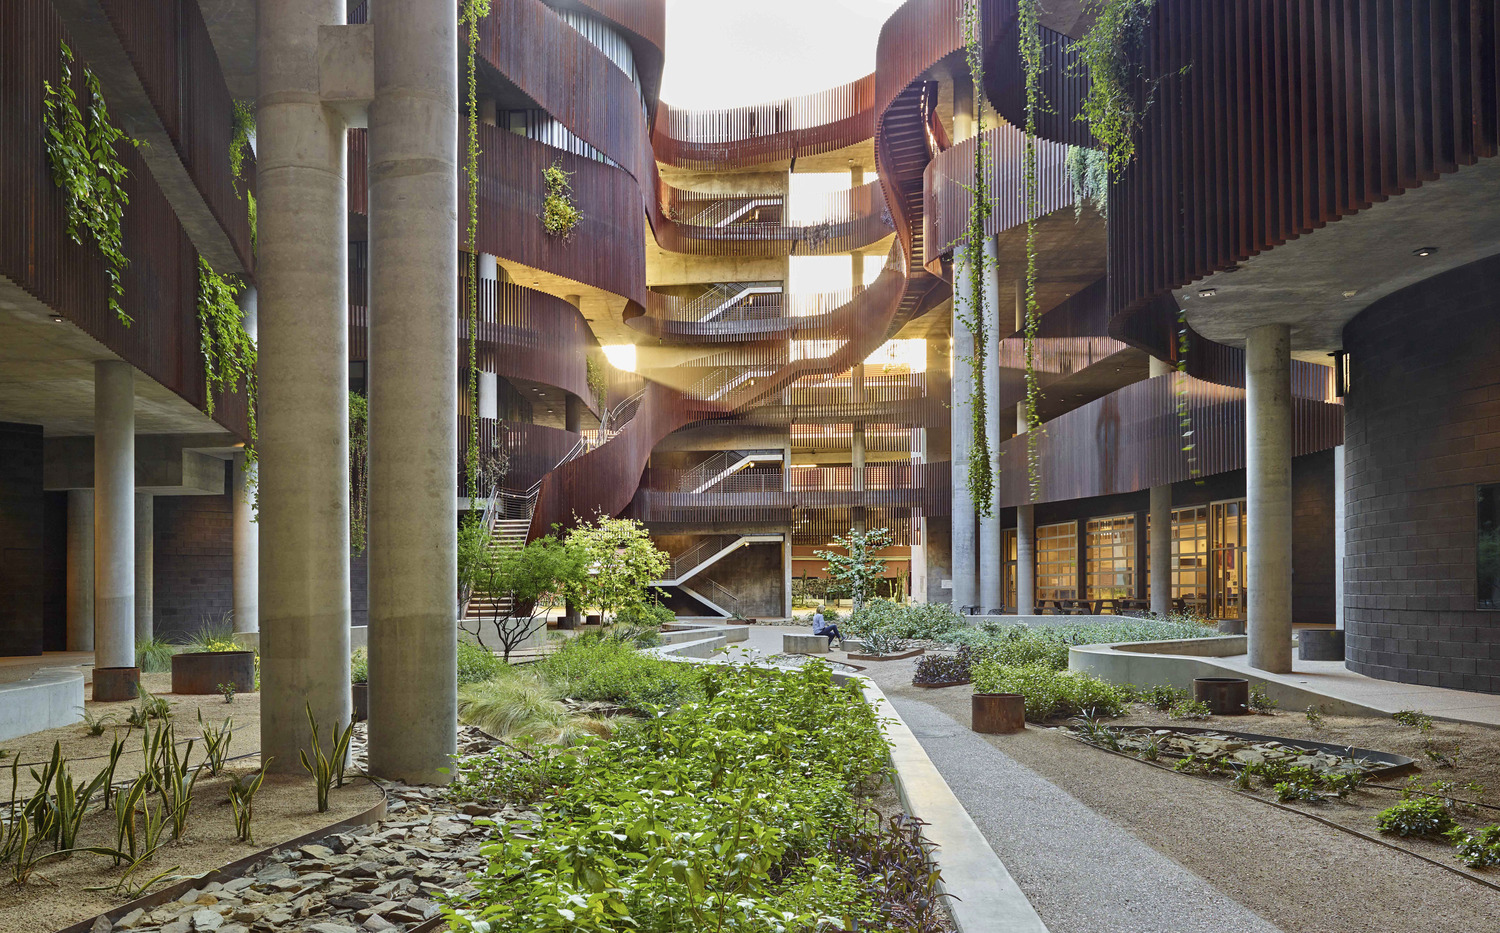 University of Arizona Environment + Natural Resources 2Tucson, AZ, United States by Richärd Kennedy Architects